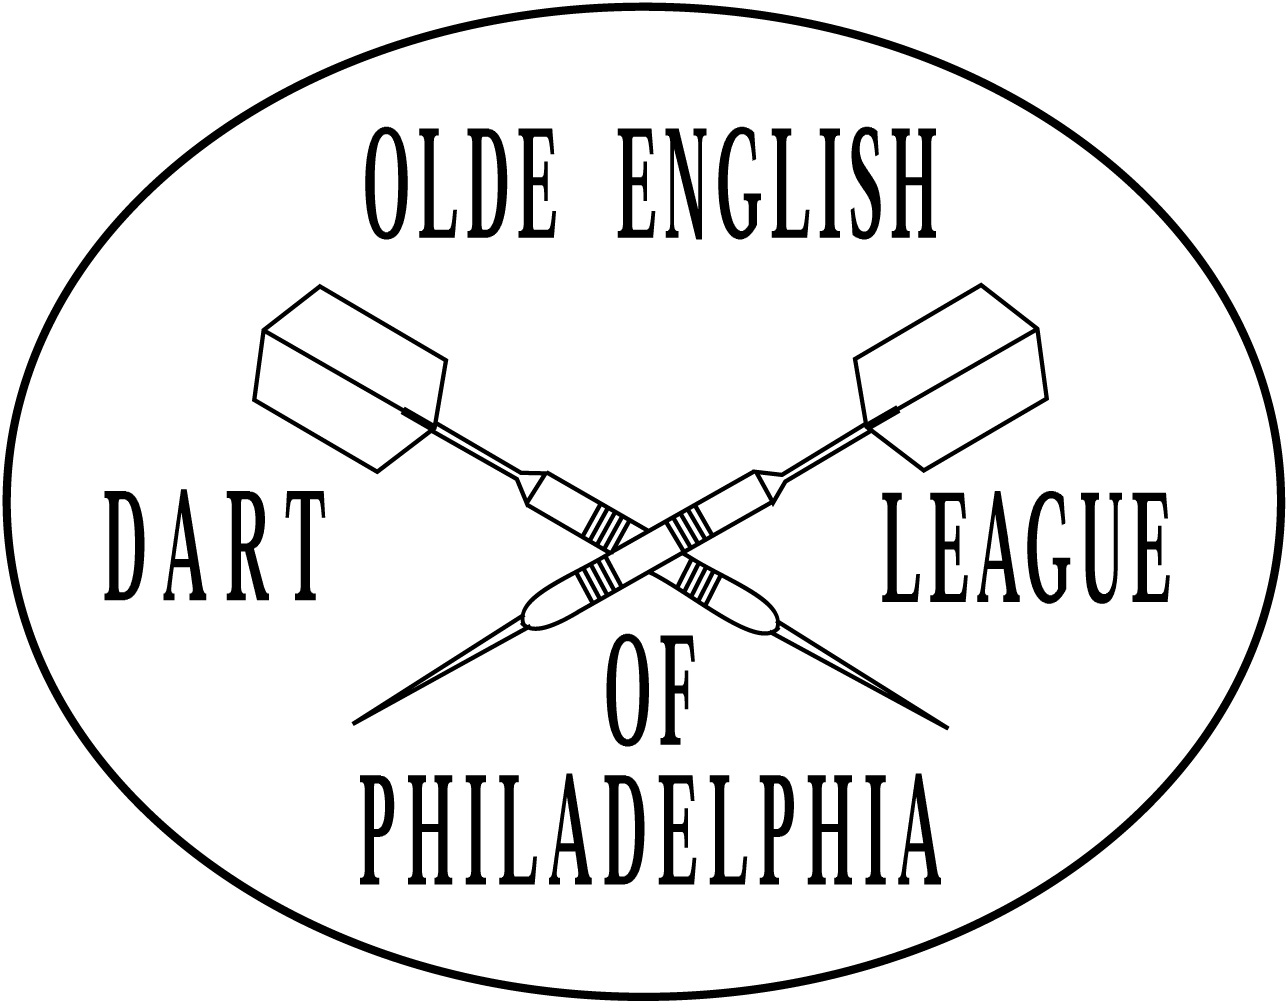 Olde English Dart League of Philadelphia logo